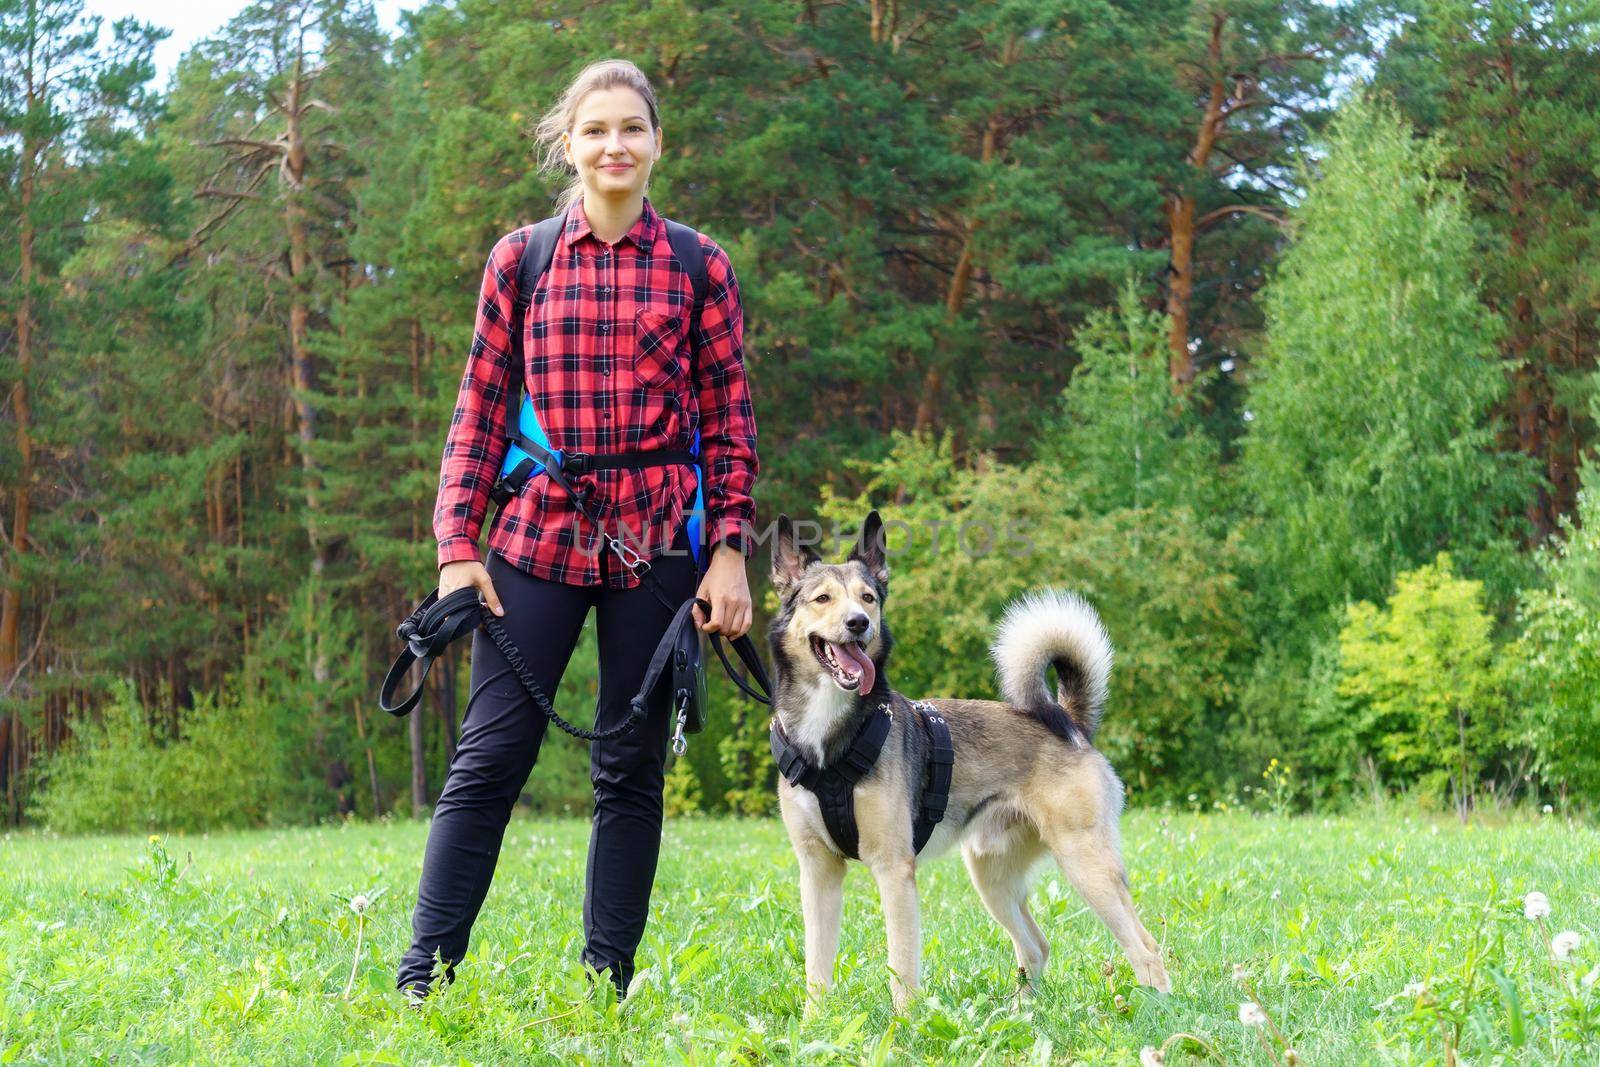 A girl walks with a dog warm day, a pleasant walk through the forest.